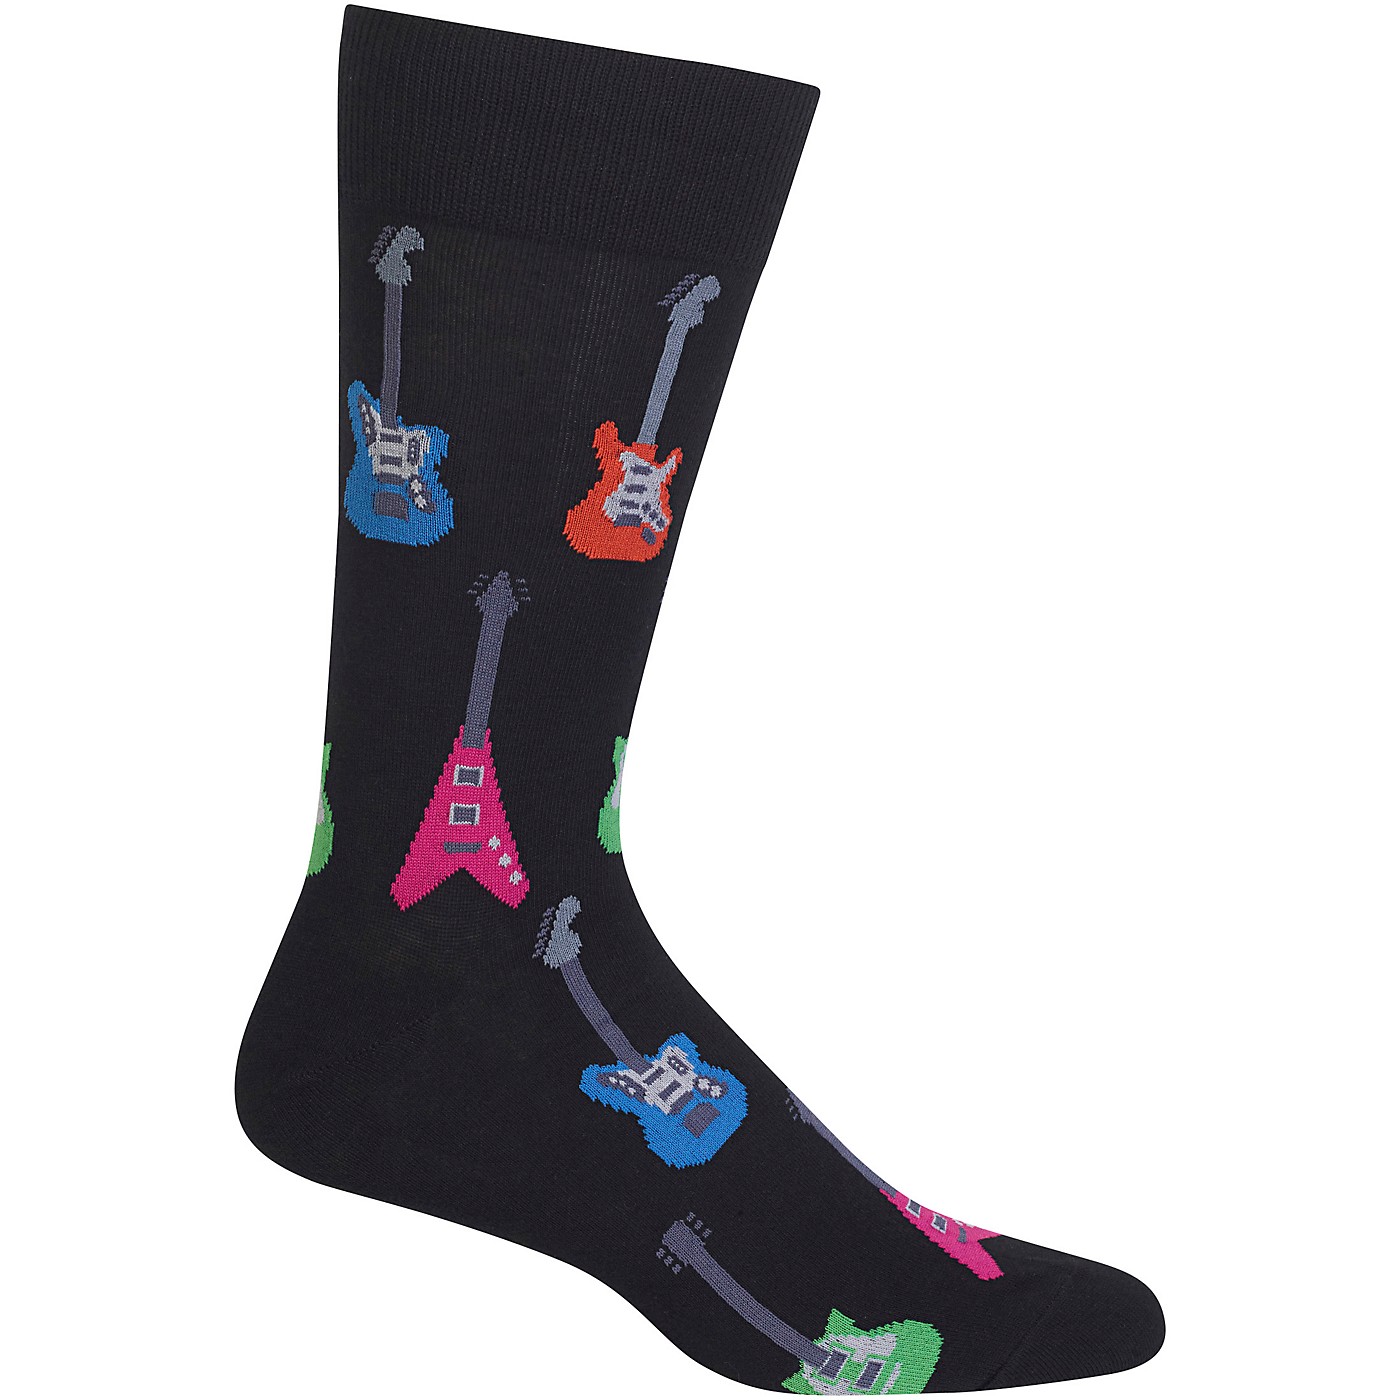 Hot Sox Men's Electric Guitar Socks - Black thumbnail